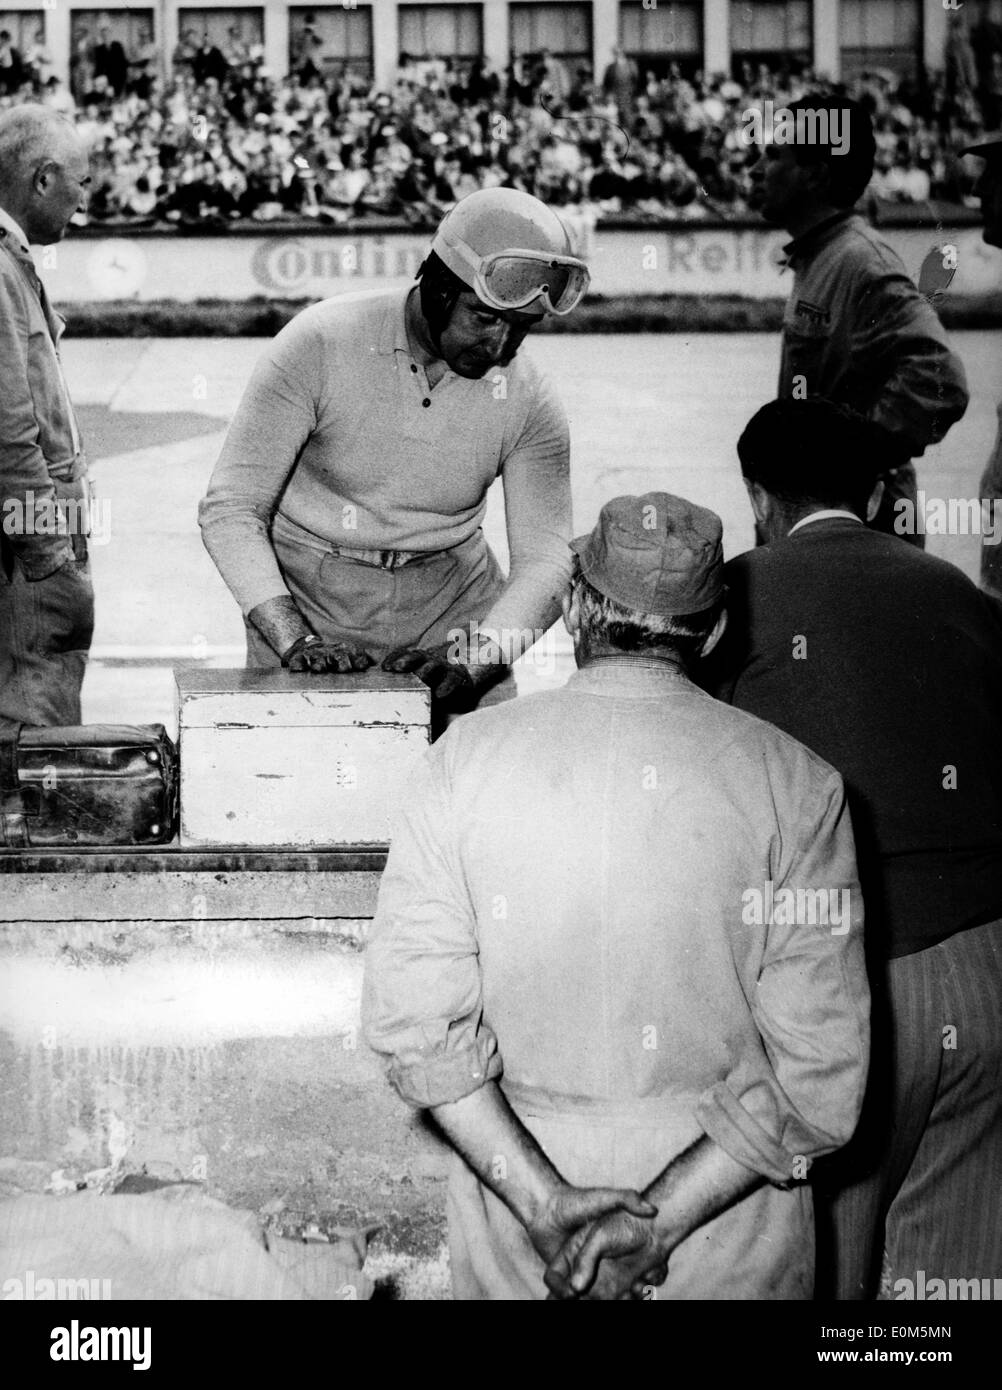 Jul 18, 1953; Nirburgring, Germania; italiano Alberto Ascari al box durante una gara in Nirburgring. Foto Stock